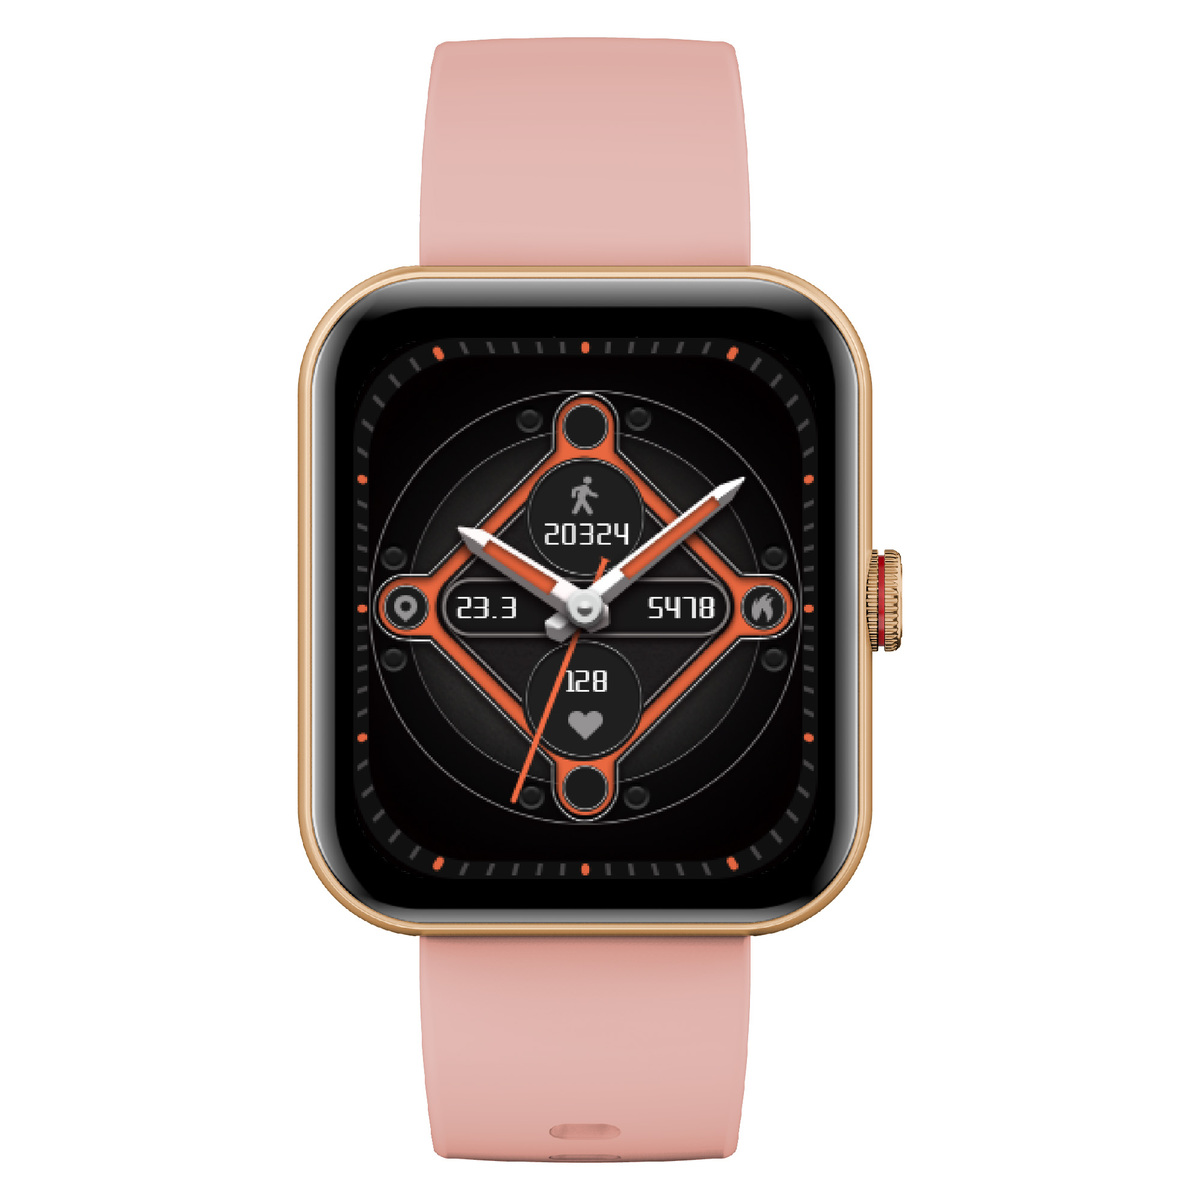 Xcell Smart Watch G5 Talk ,Pink Color,Fitness Tracker,XL-WATCH-G5-TALK-RGFPNKS